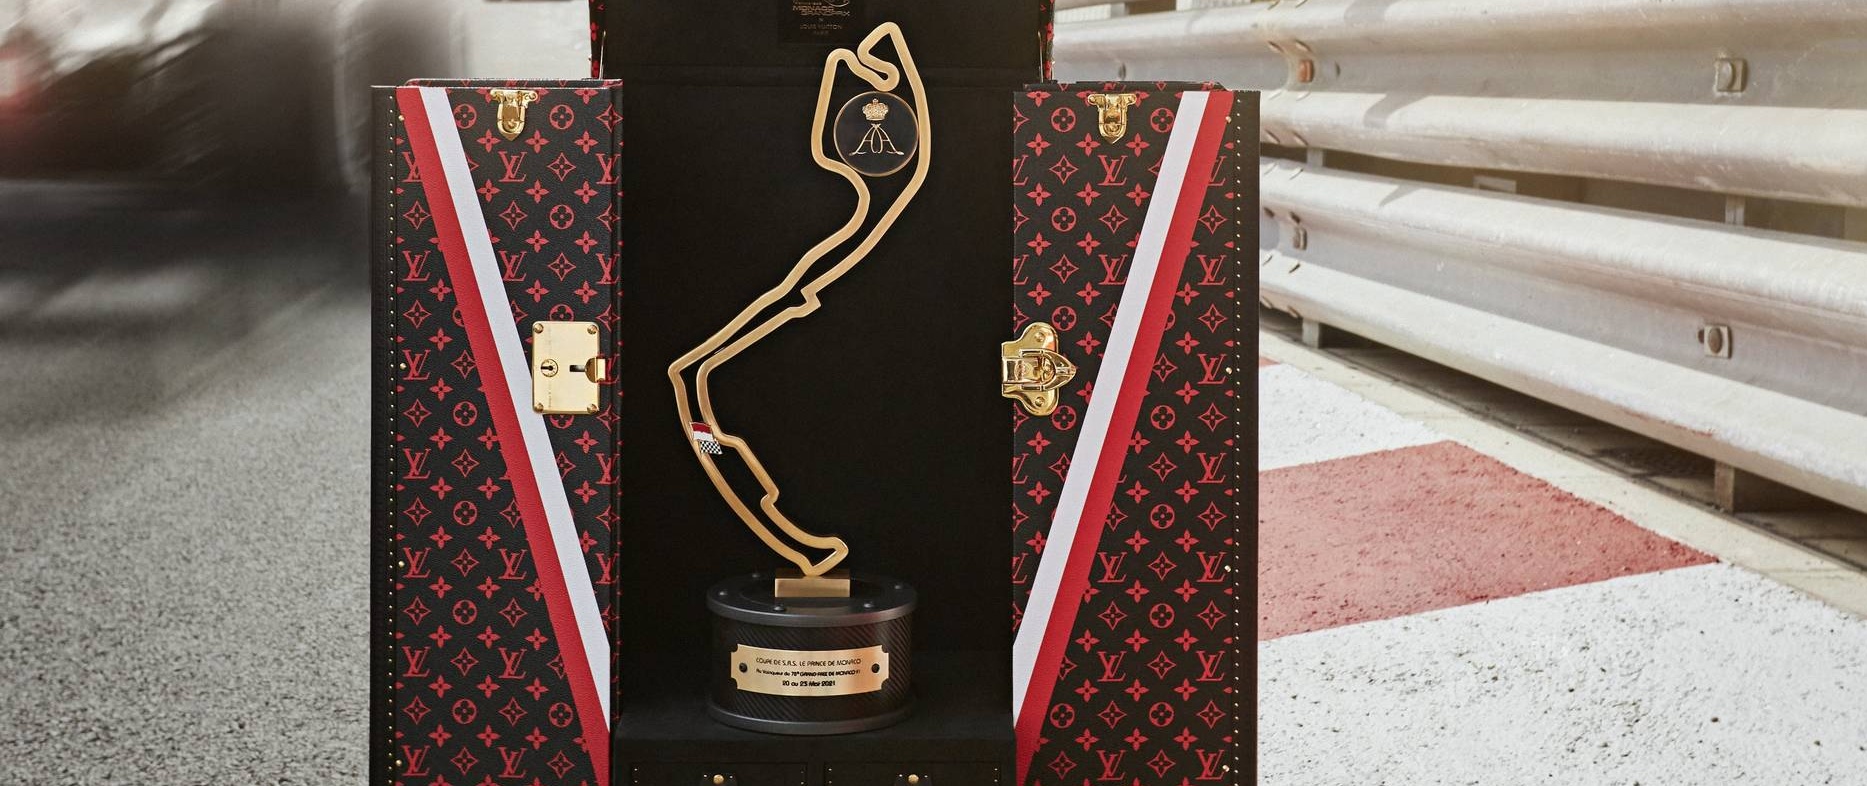 The Louis Vuitton Monaco Grand Prix Case Has Been Unveiled